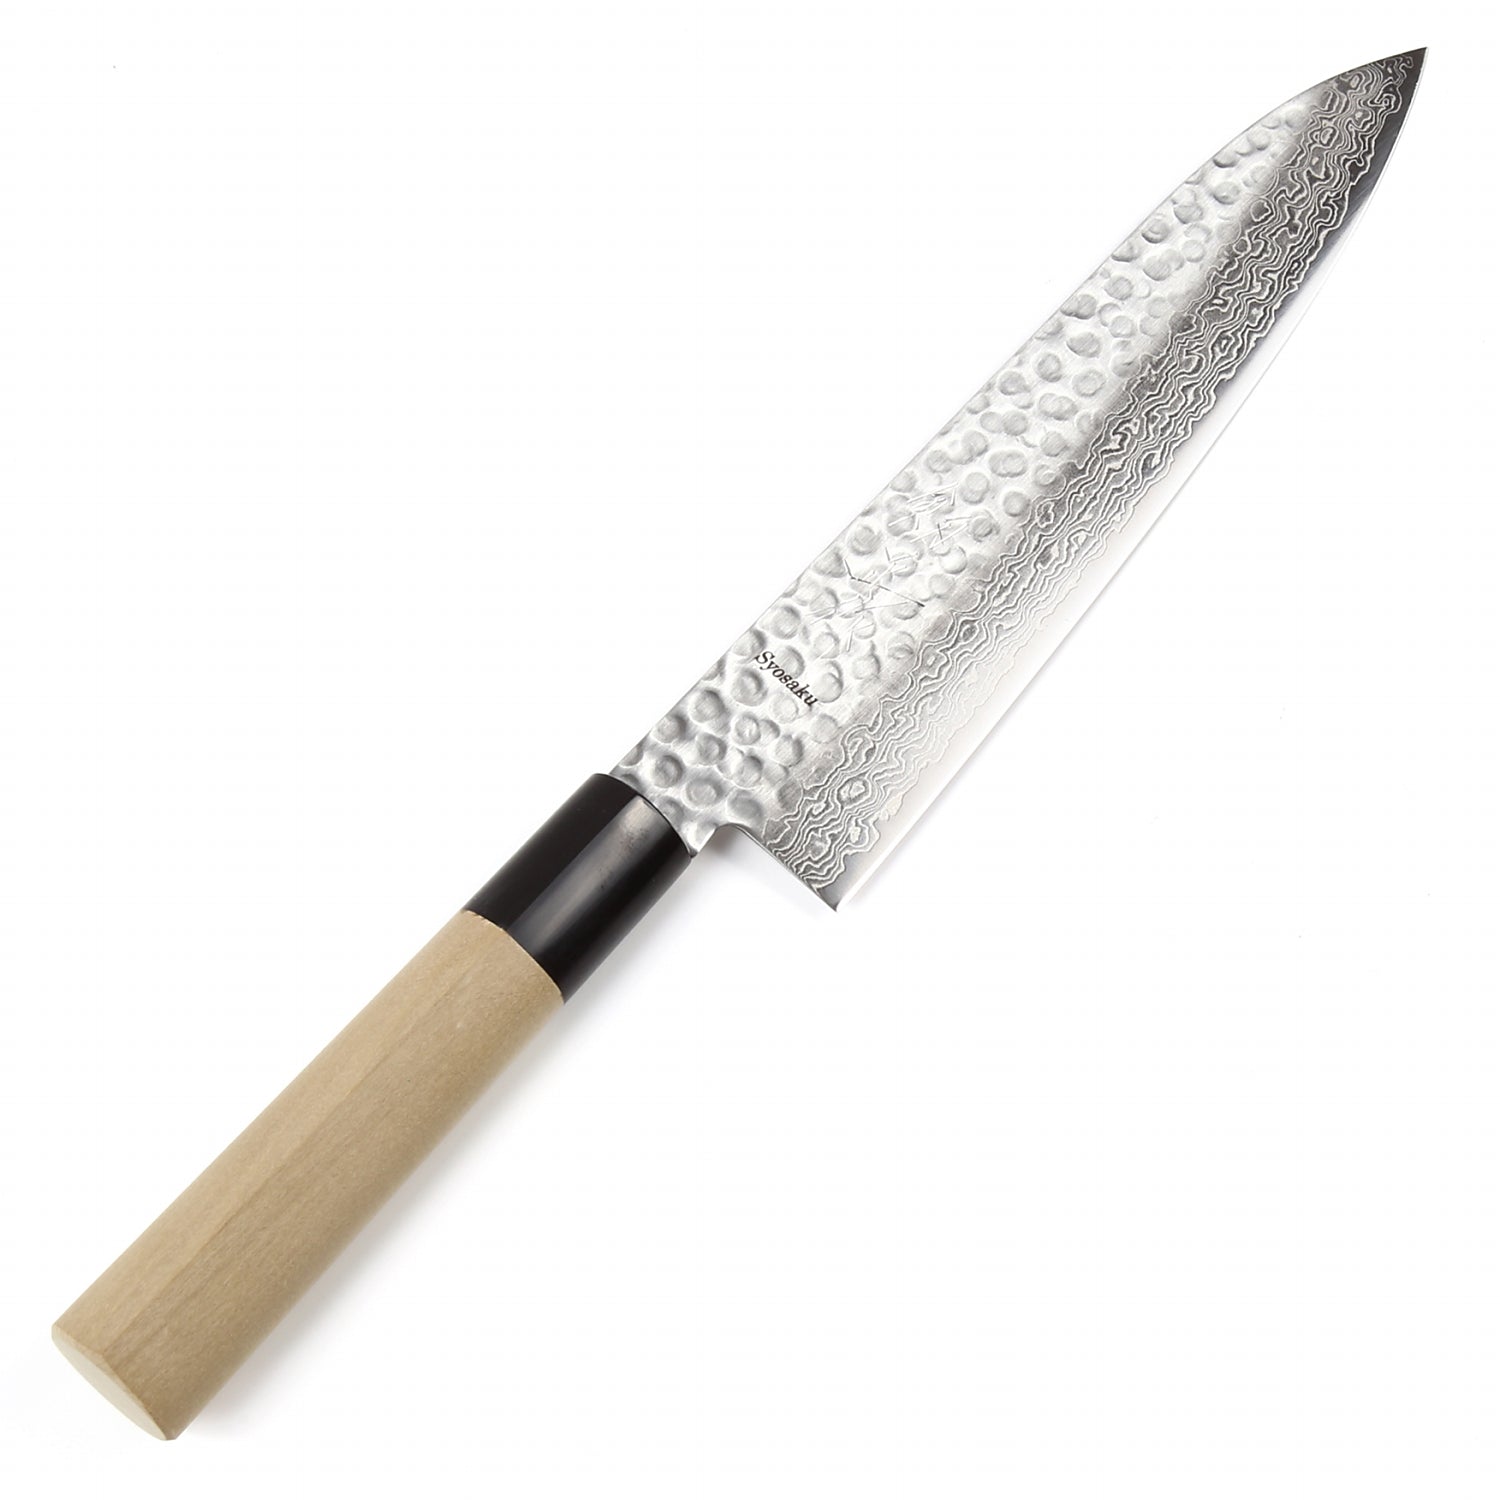 BRODARK Damascus Knife Set 3 PCS With Premium VG10 Damascus Steel,  Ultra-Sharp Professional Japanese Kitchen Knife Set, Full Tang Chef Knife  Set With G10 Handle, Gift Box